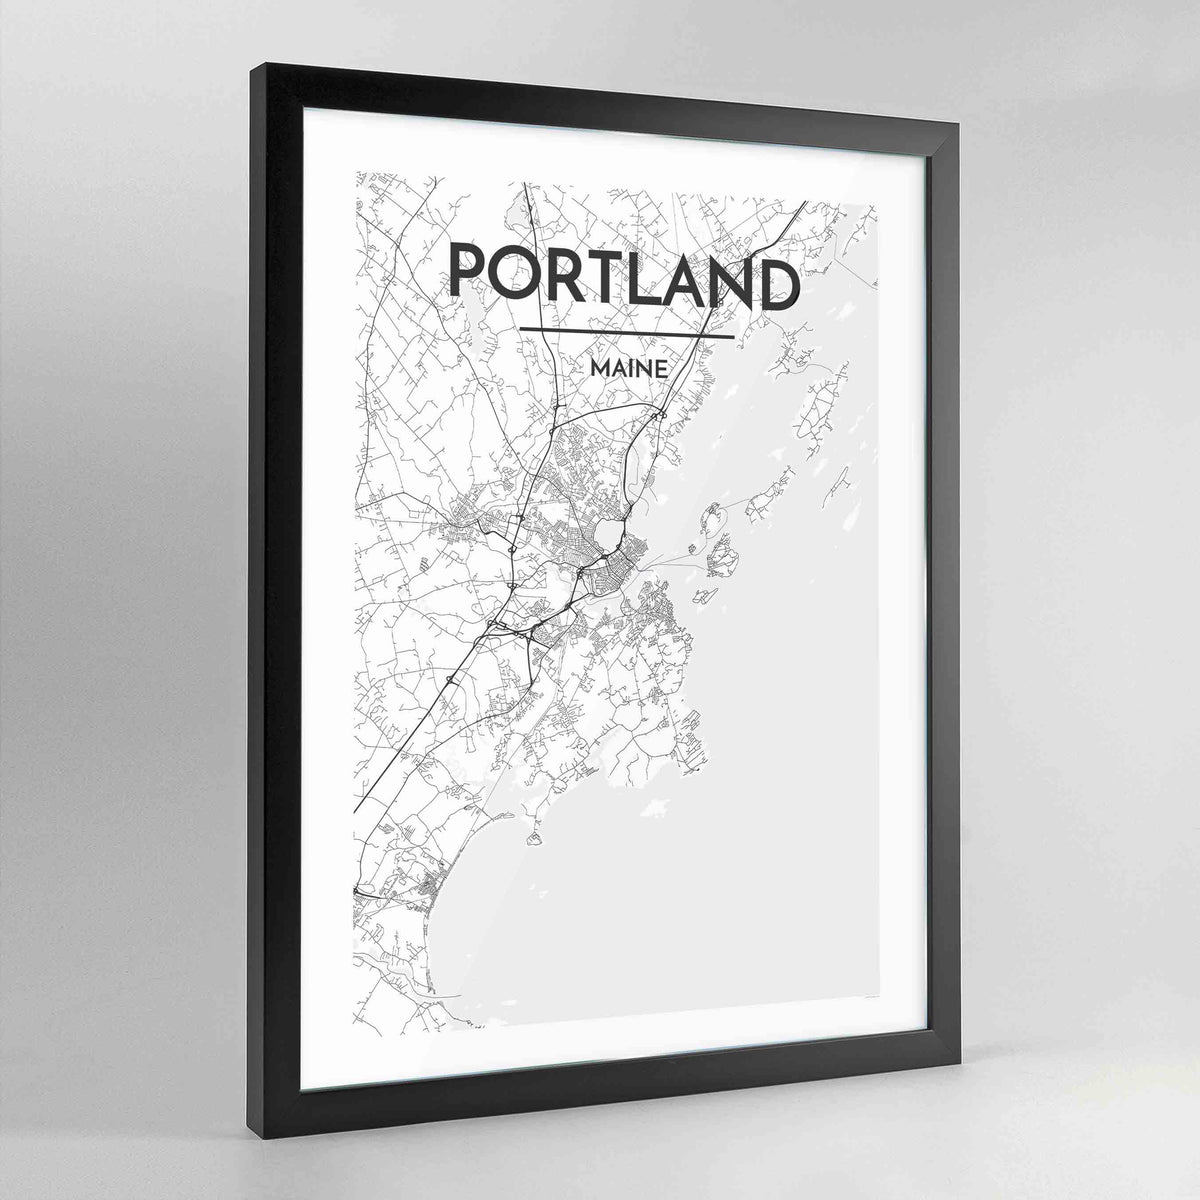 Portland - Maine Map Art Print - Framed